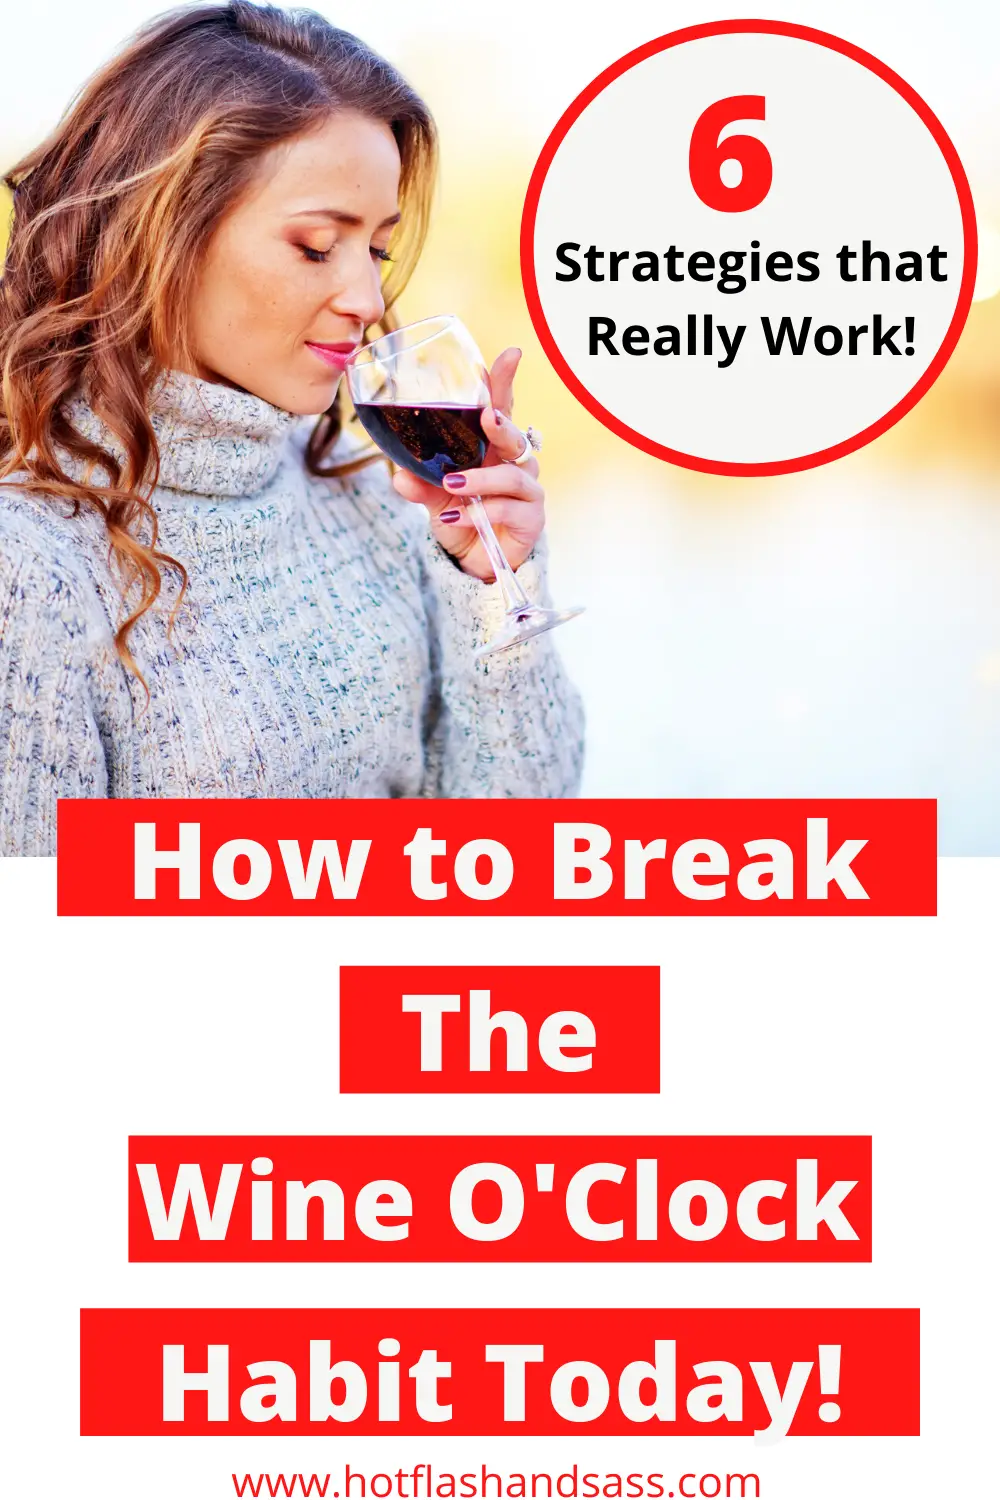 How to Break the Wine O